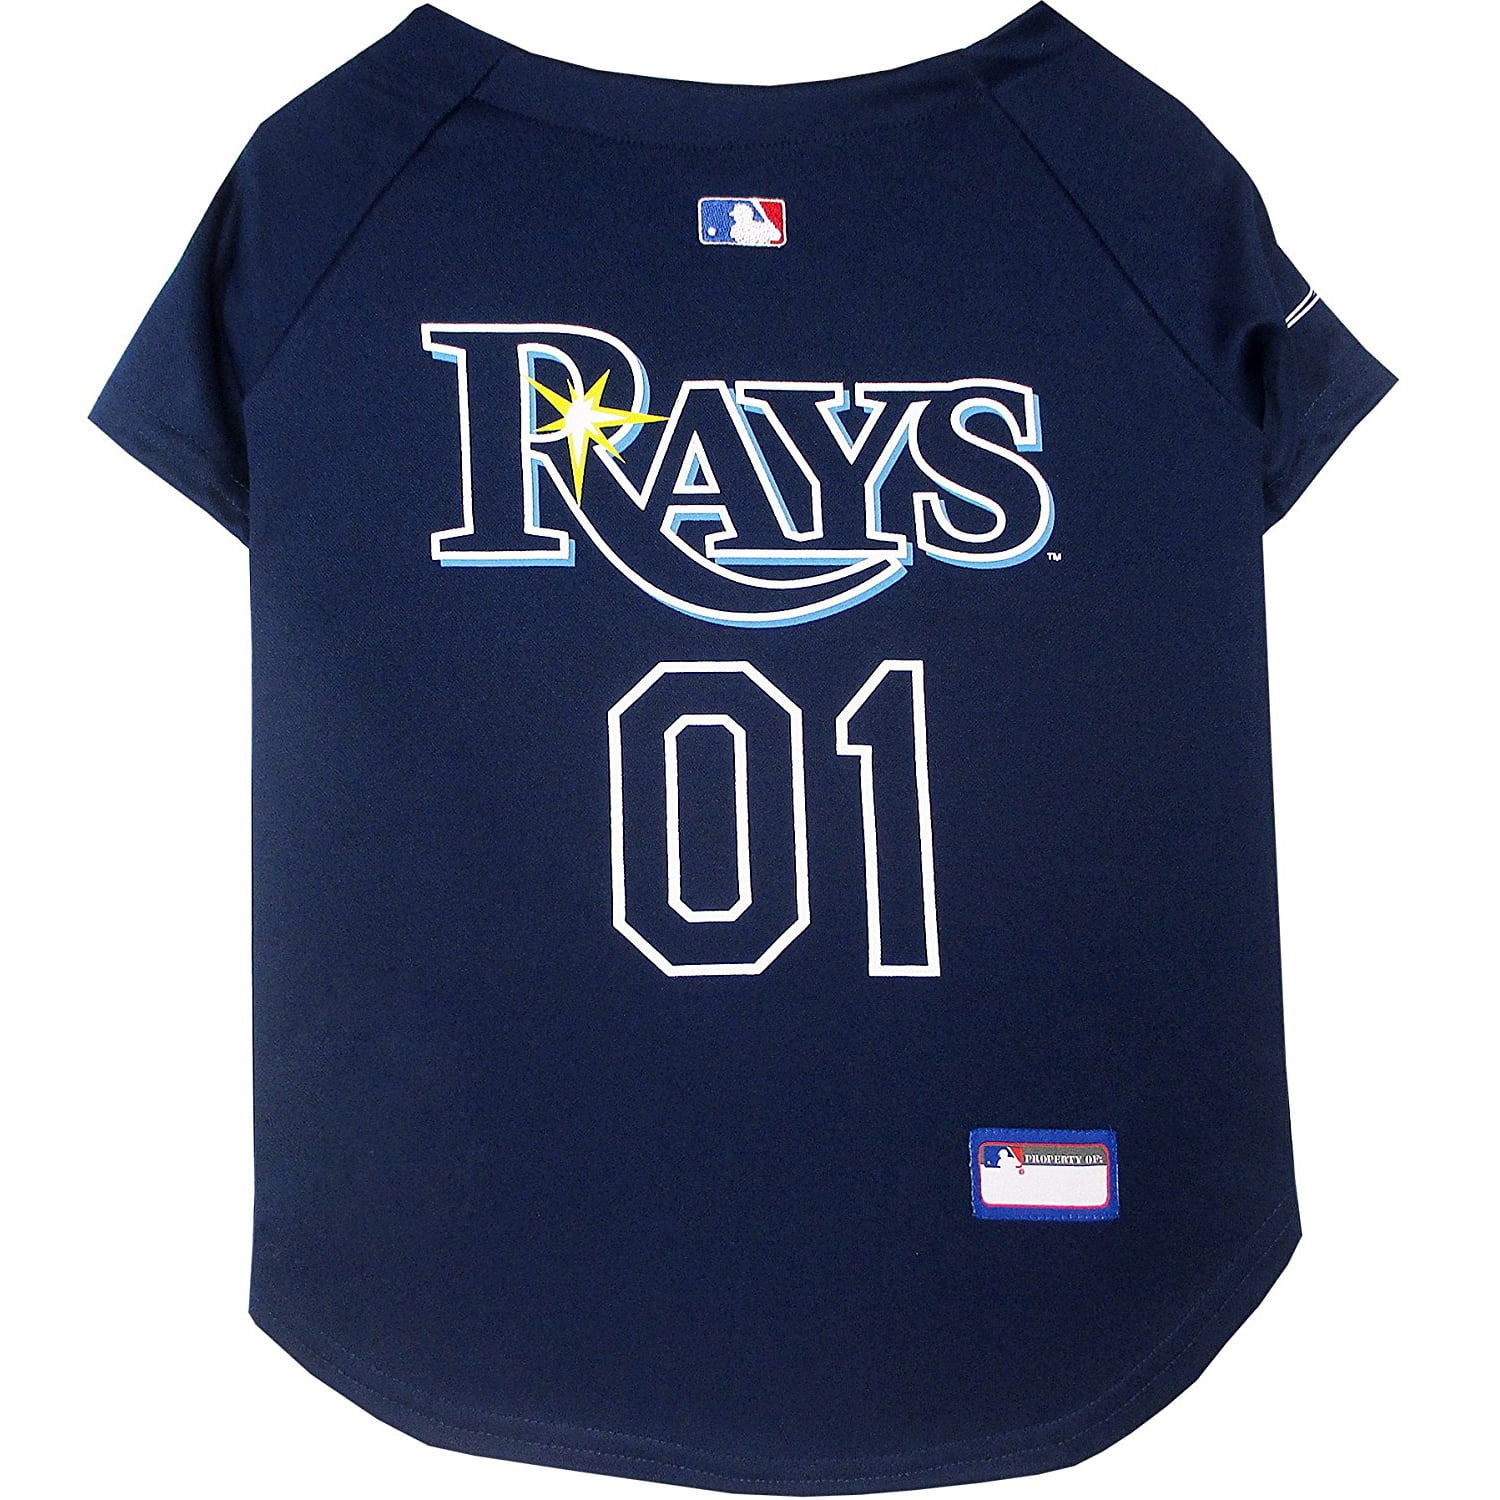  MLB Tampa Bay Rays V-Neck Jersey, Grey/Navy, XX-Large : Sports  Fan Baseball Jerseys : Sports & Outdoors